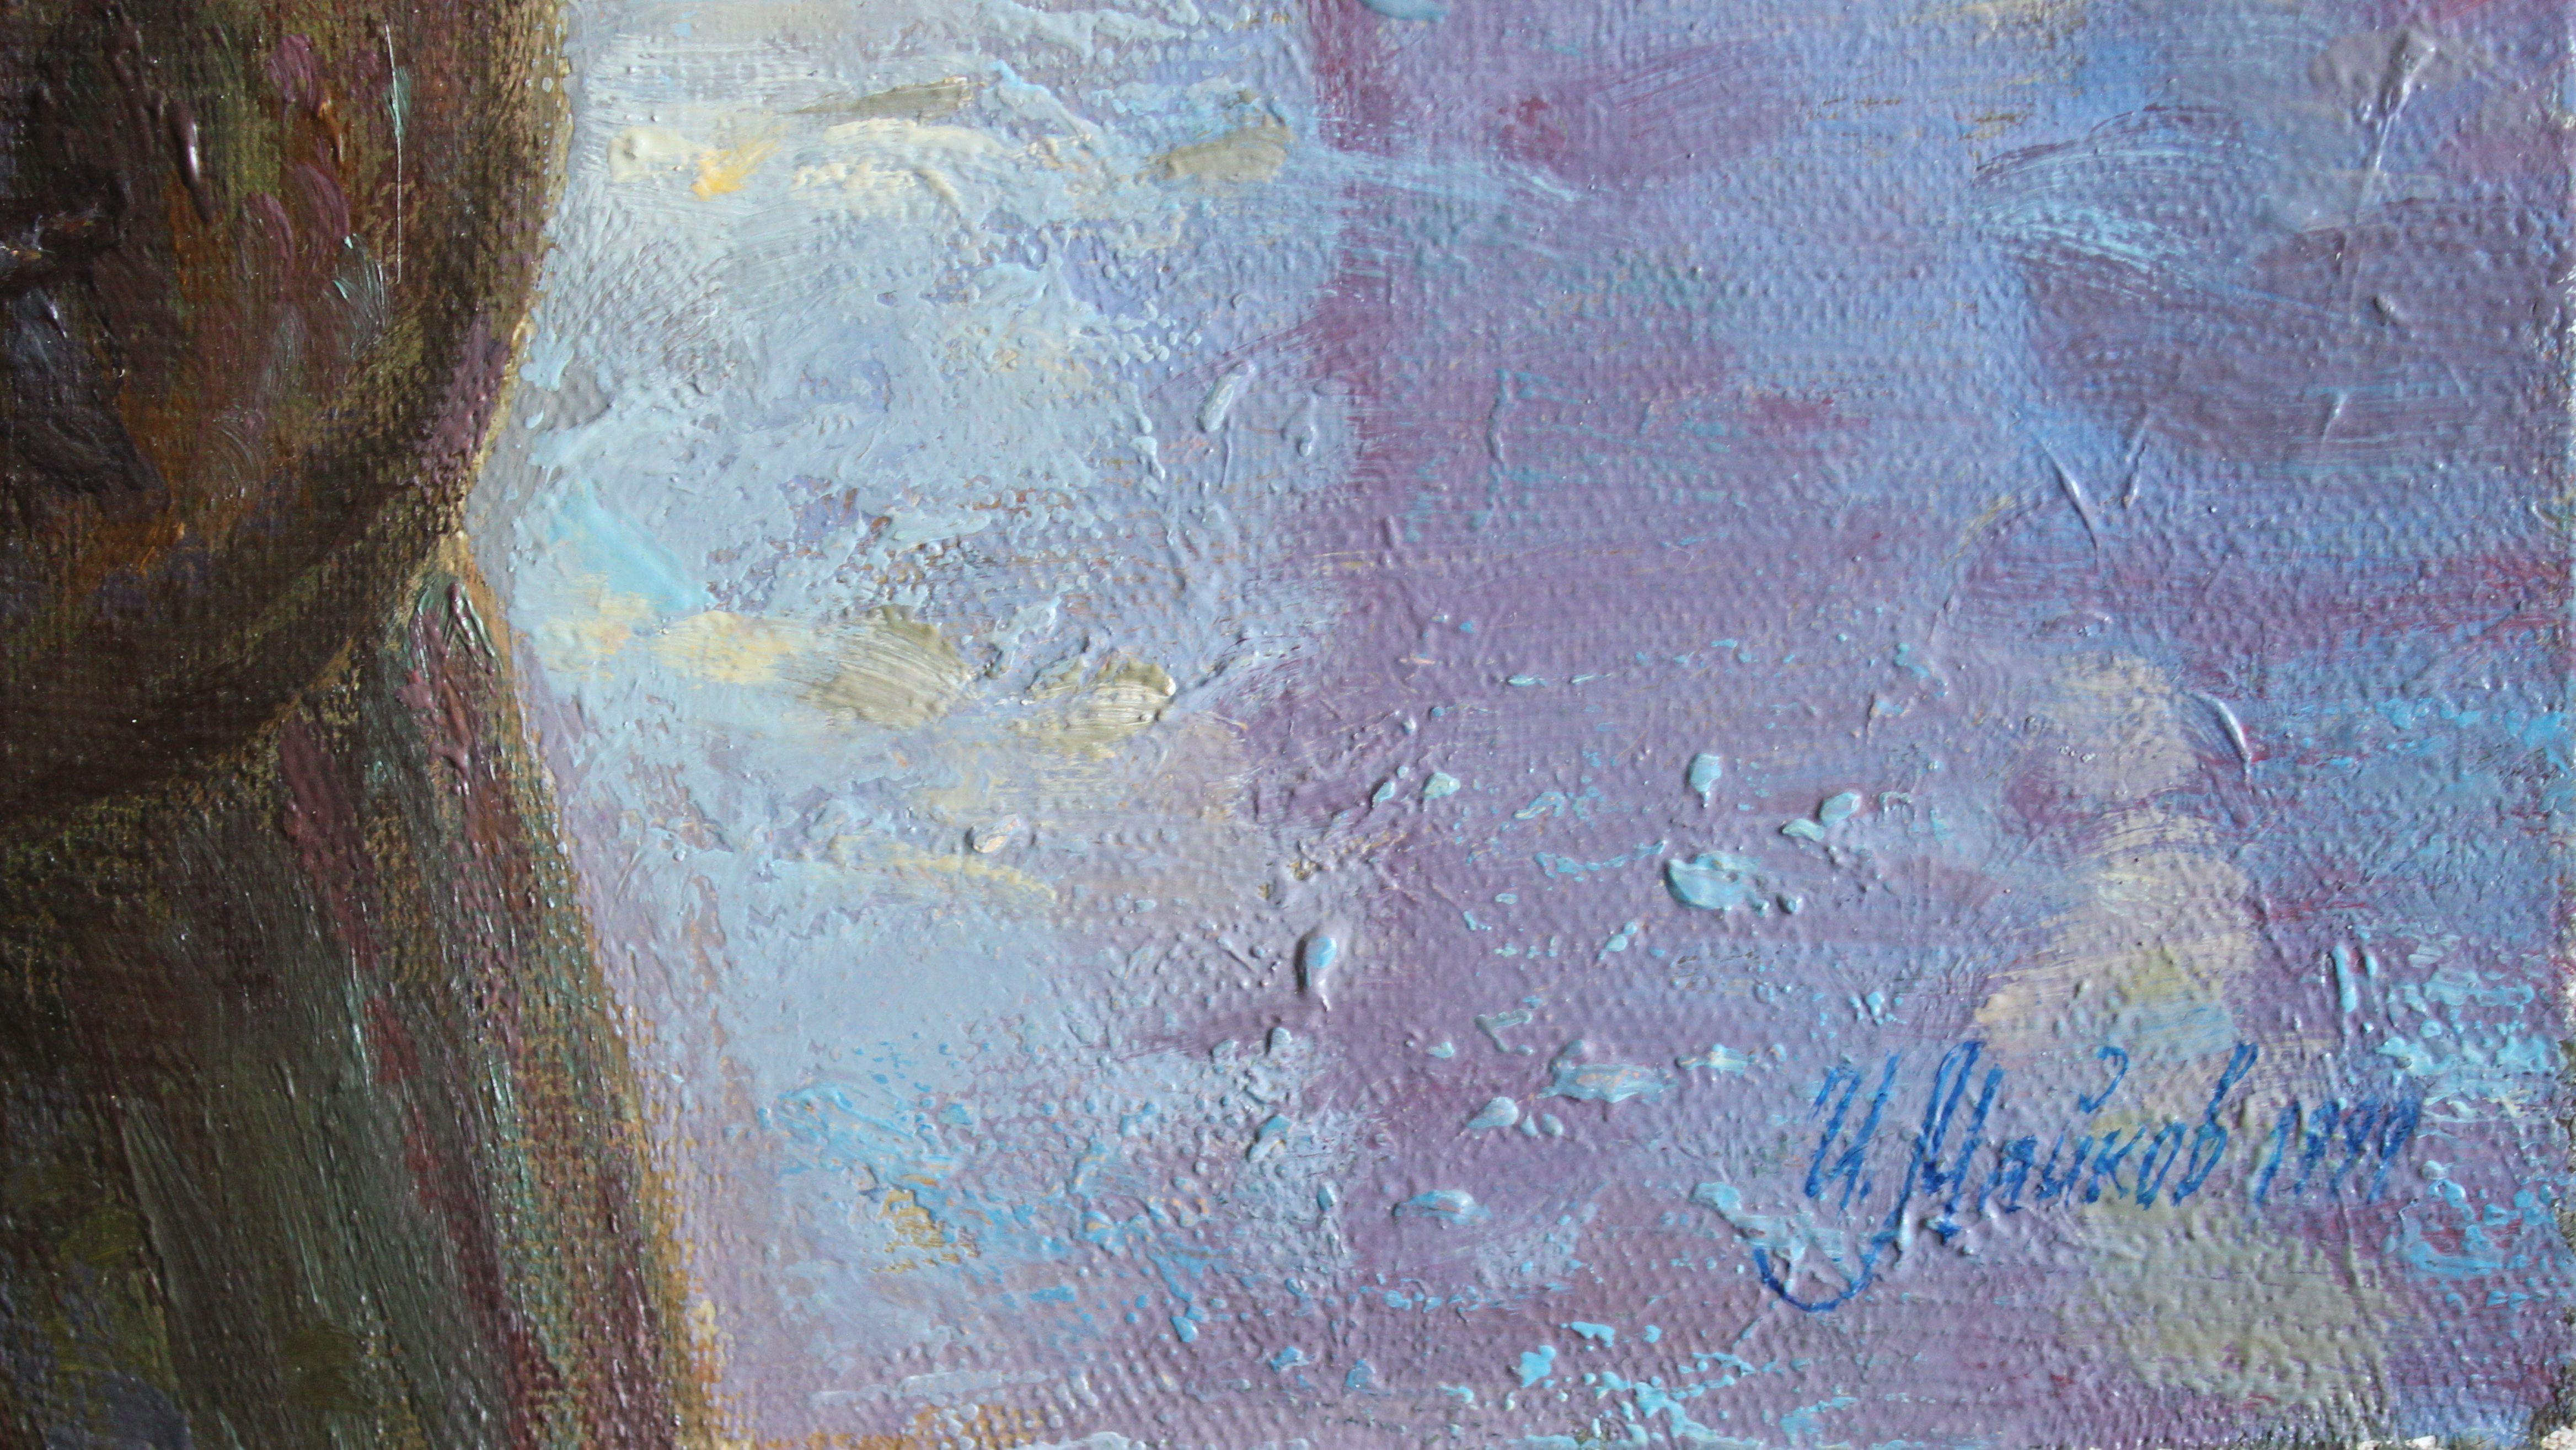 Mag 1999, canvas, oil, 74.2x80.3 cm

